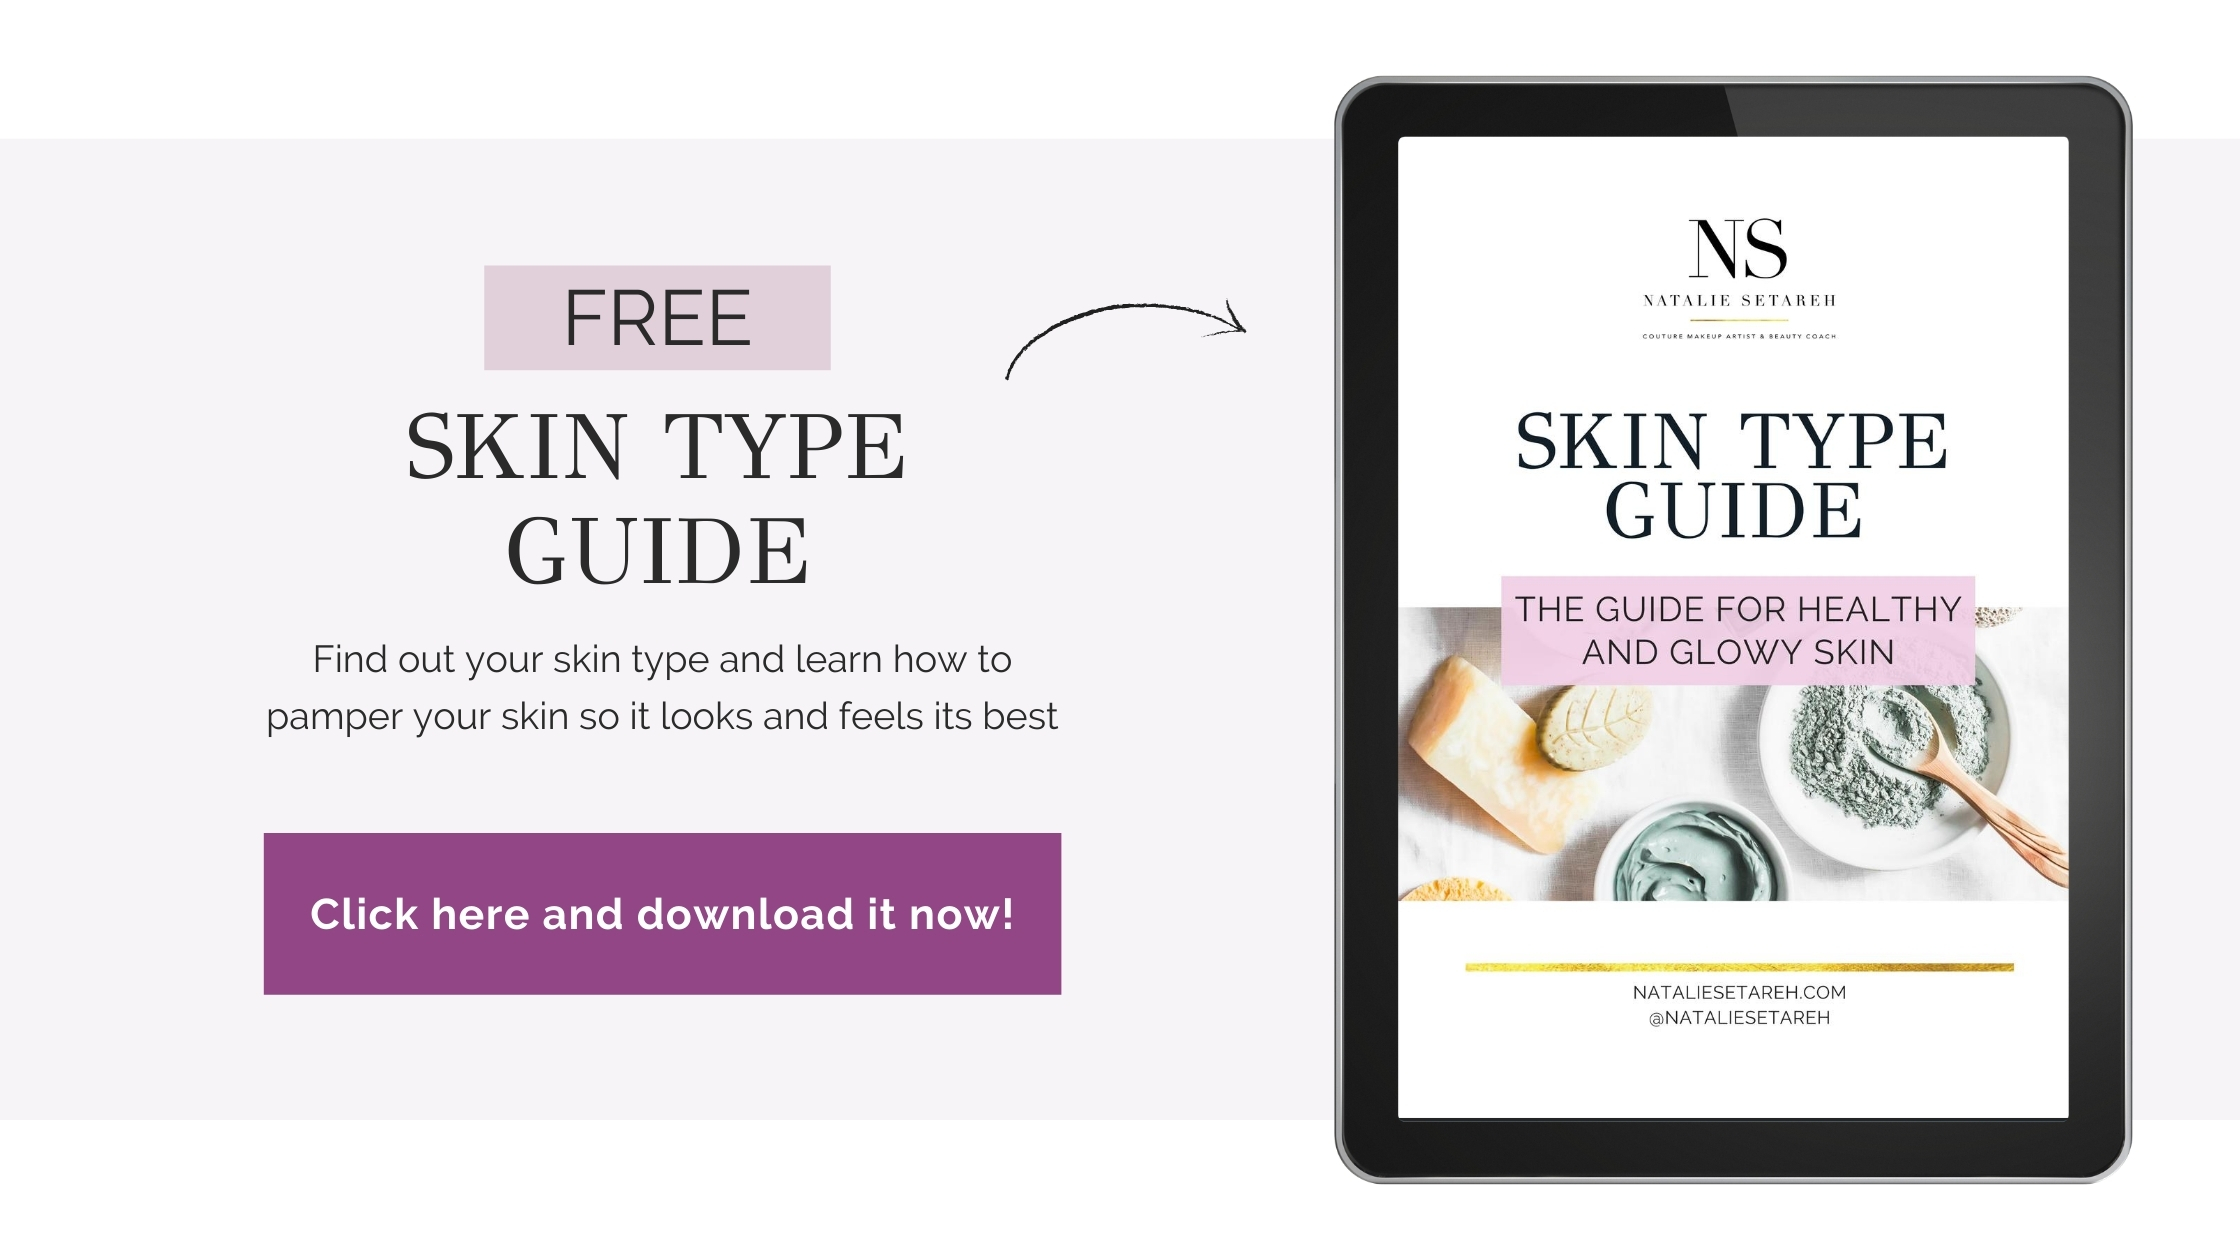 Natalie Setareh Skin Type Guide